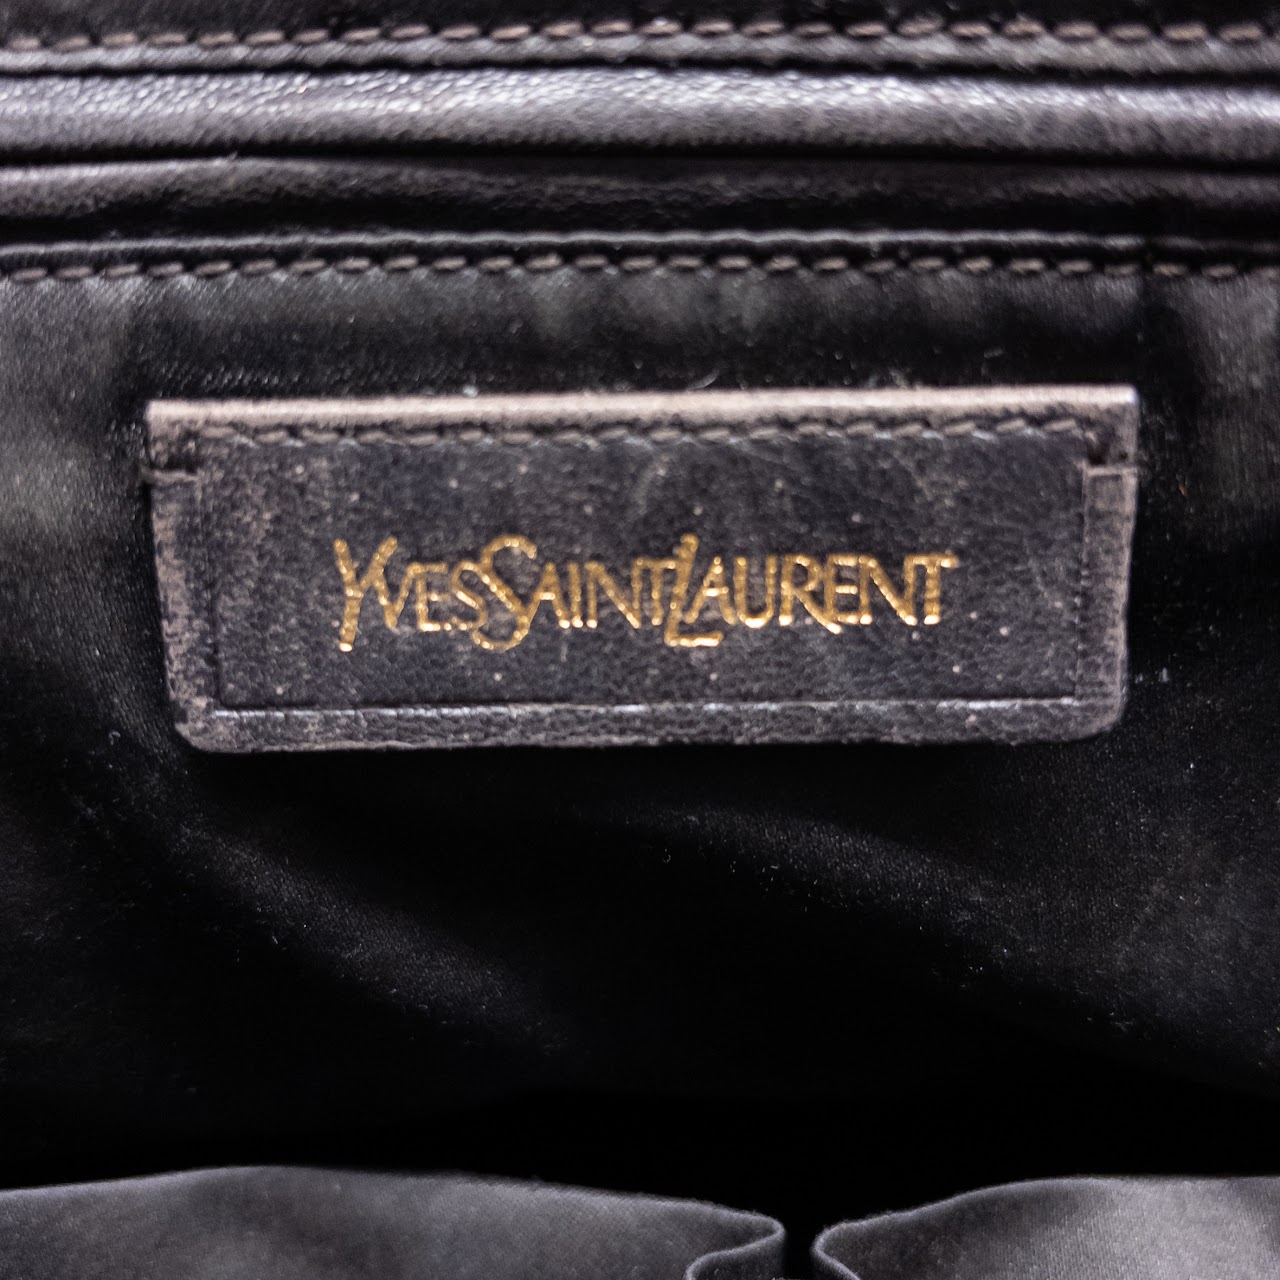 Yves Saint Laurent Muse Handbag